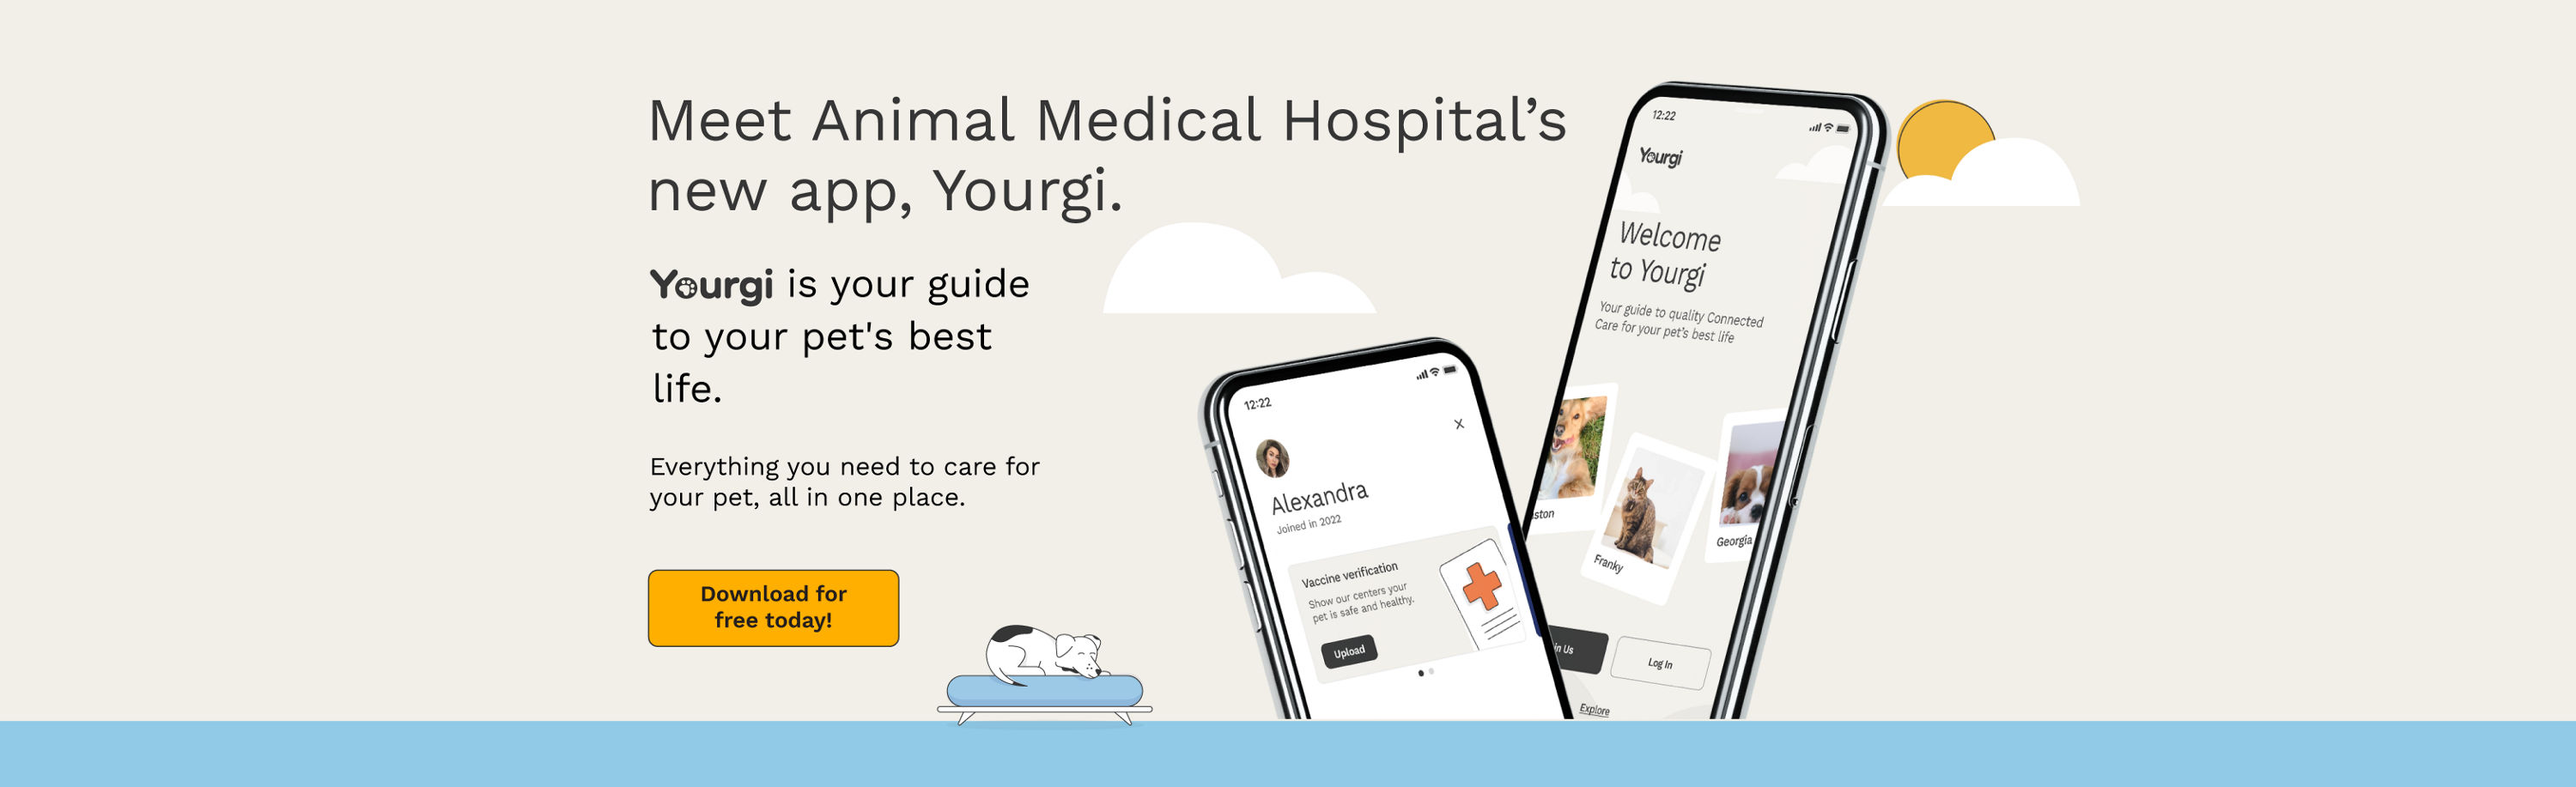 Meet Animal Medical Hospital's new app, Yourgi.